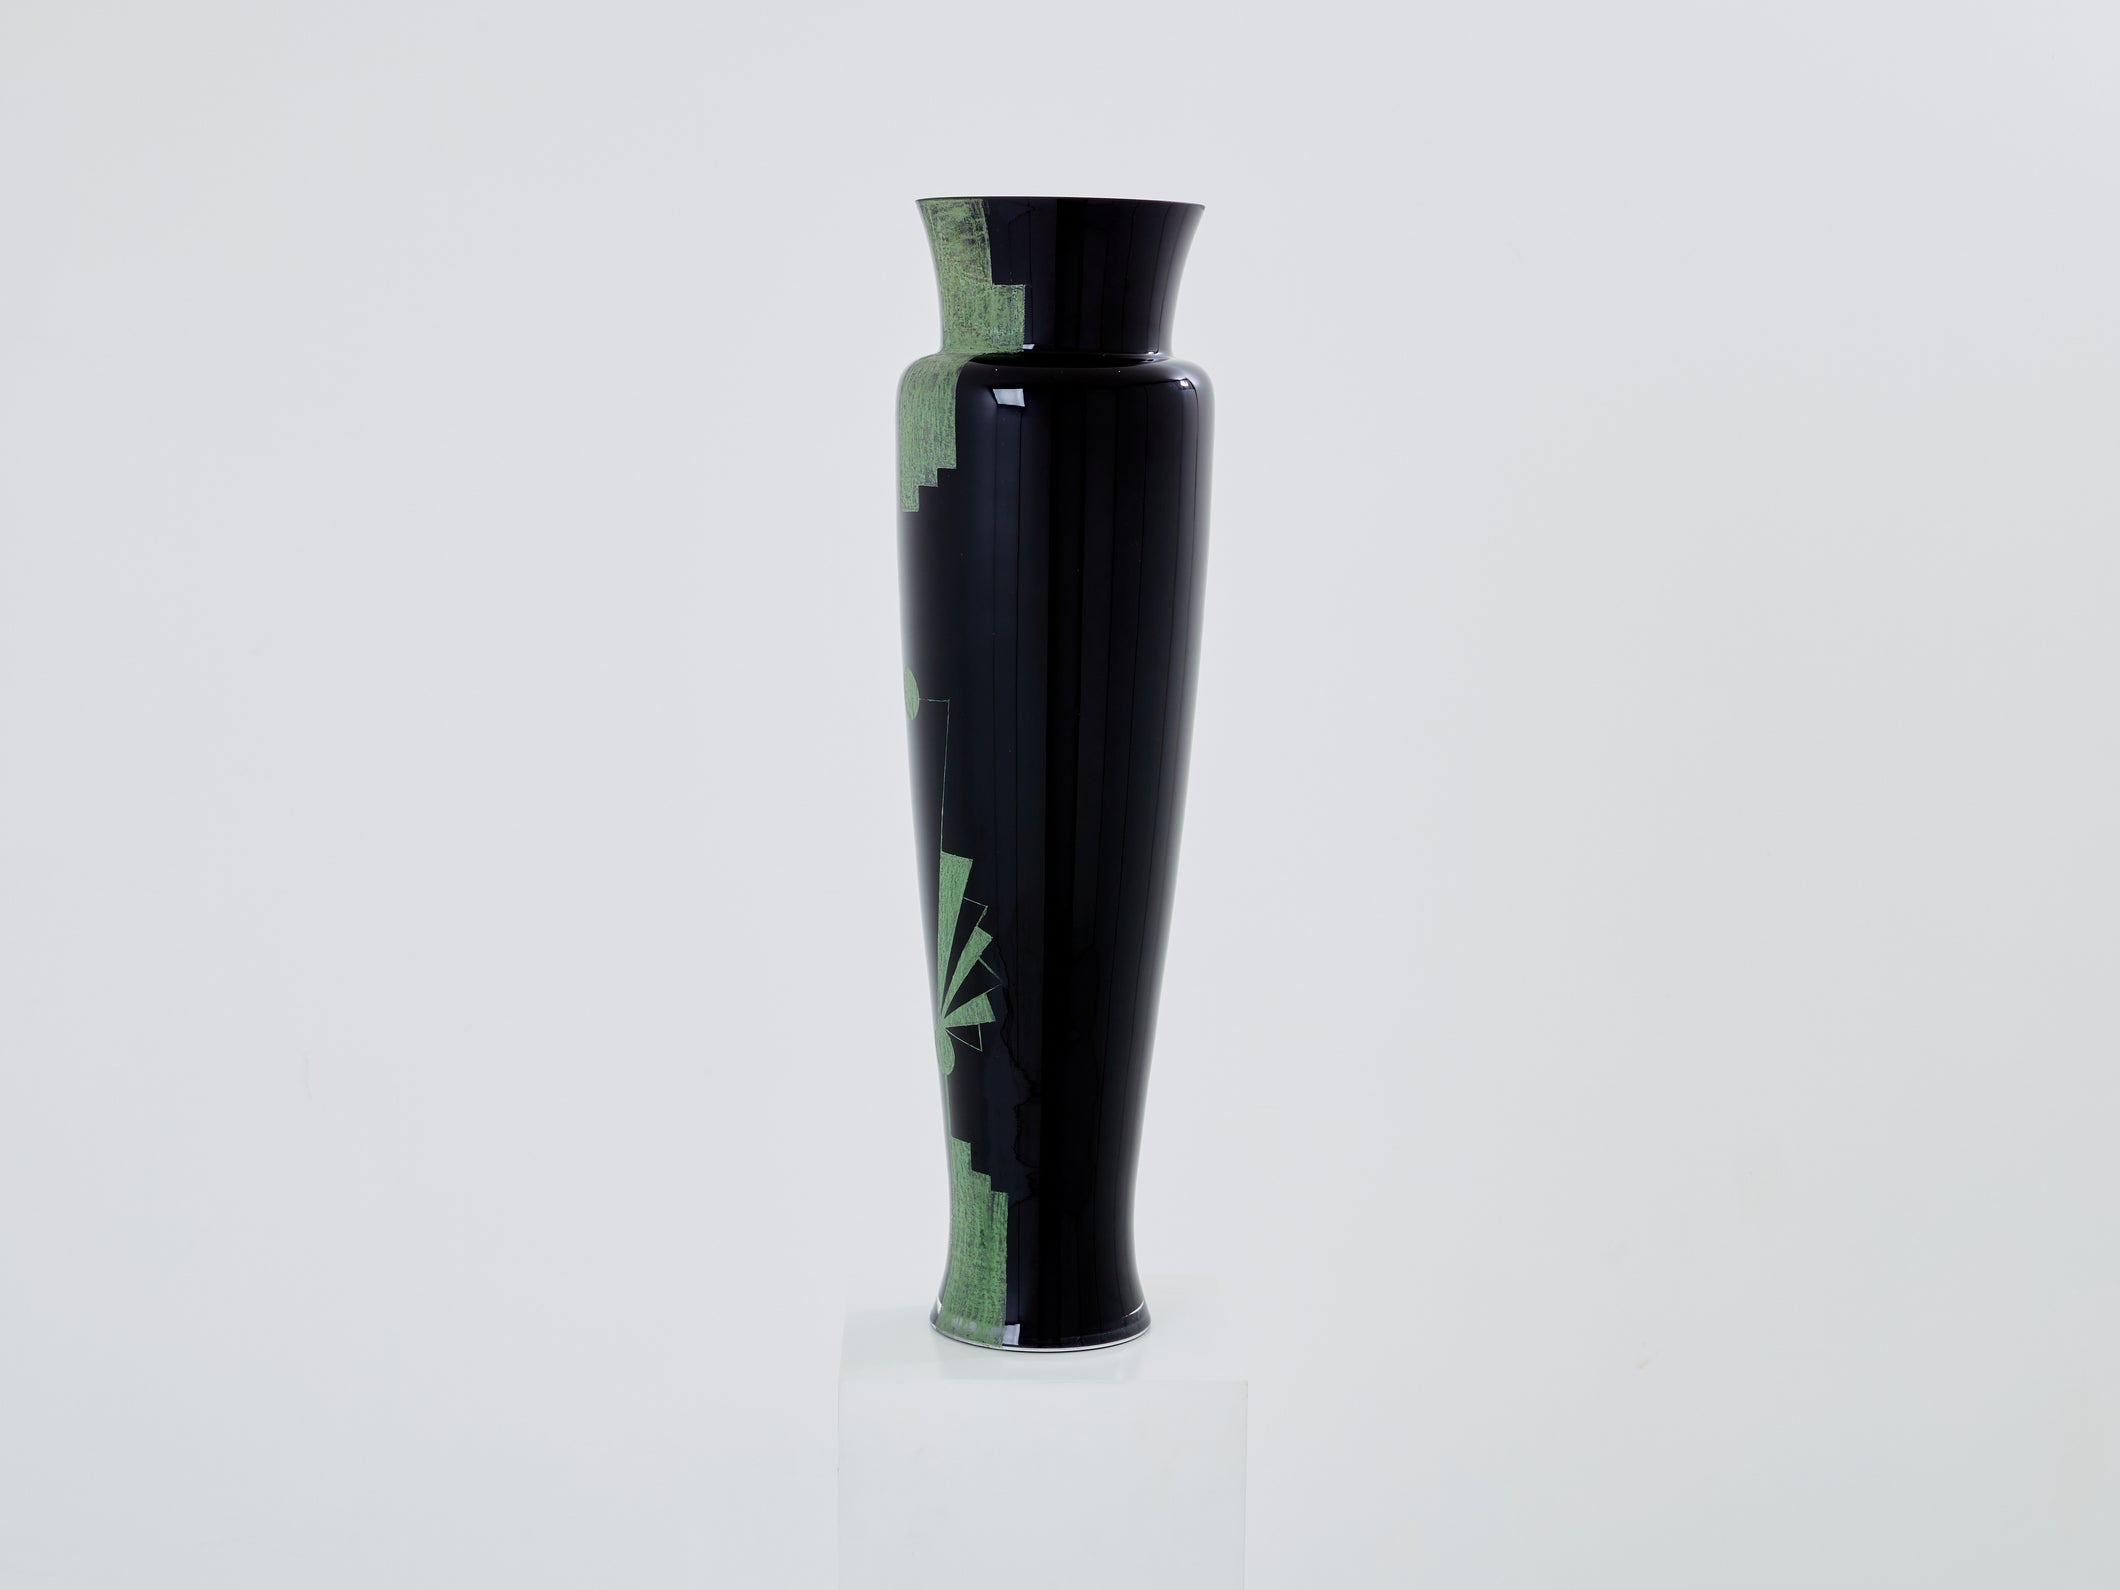 Anatole Riecke French Art Deco tall black opaline glass vase 1951